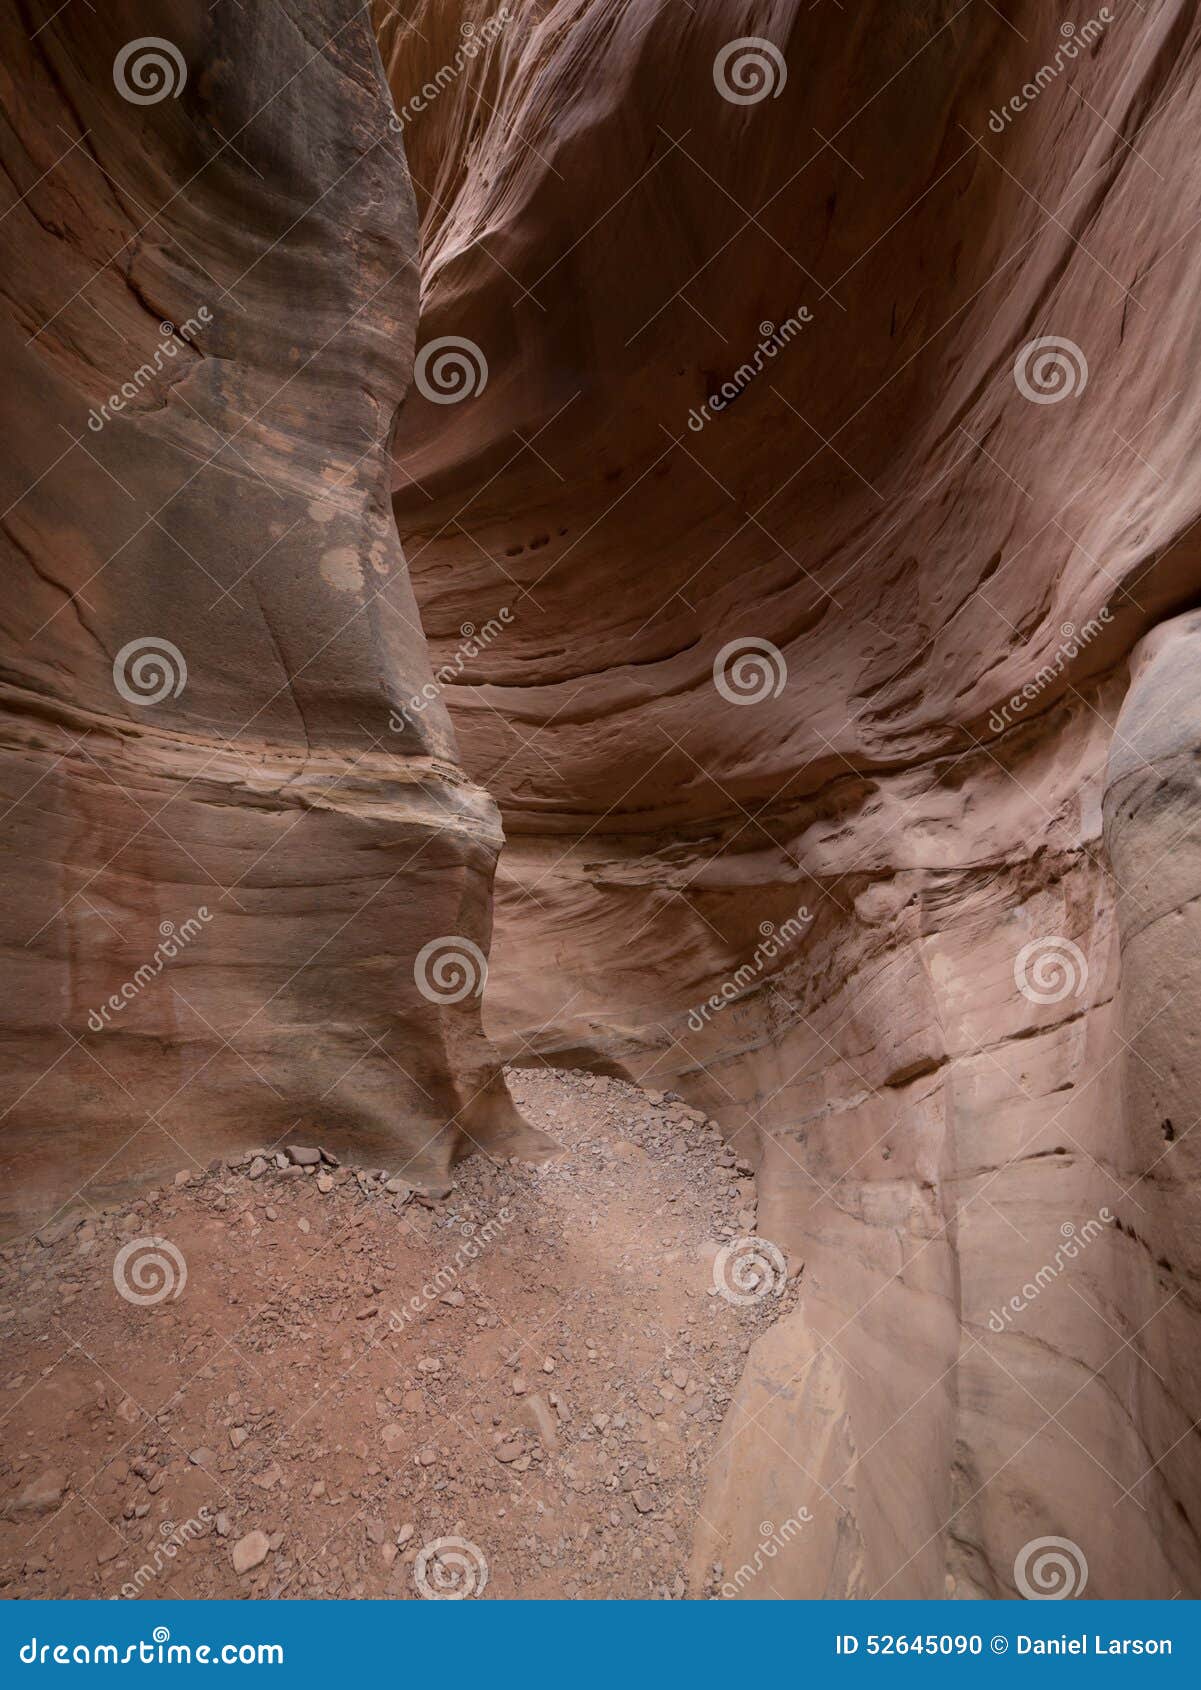 little wildhorse canyon